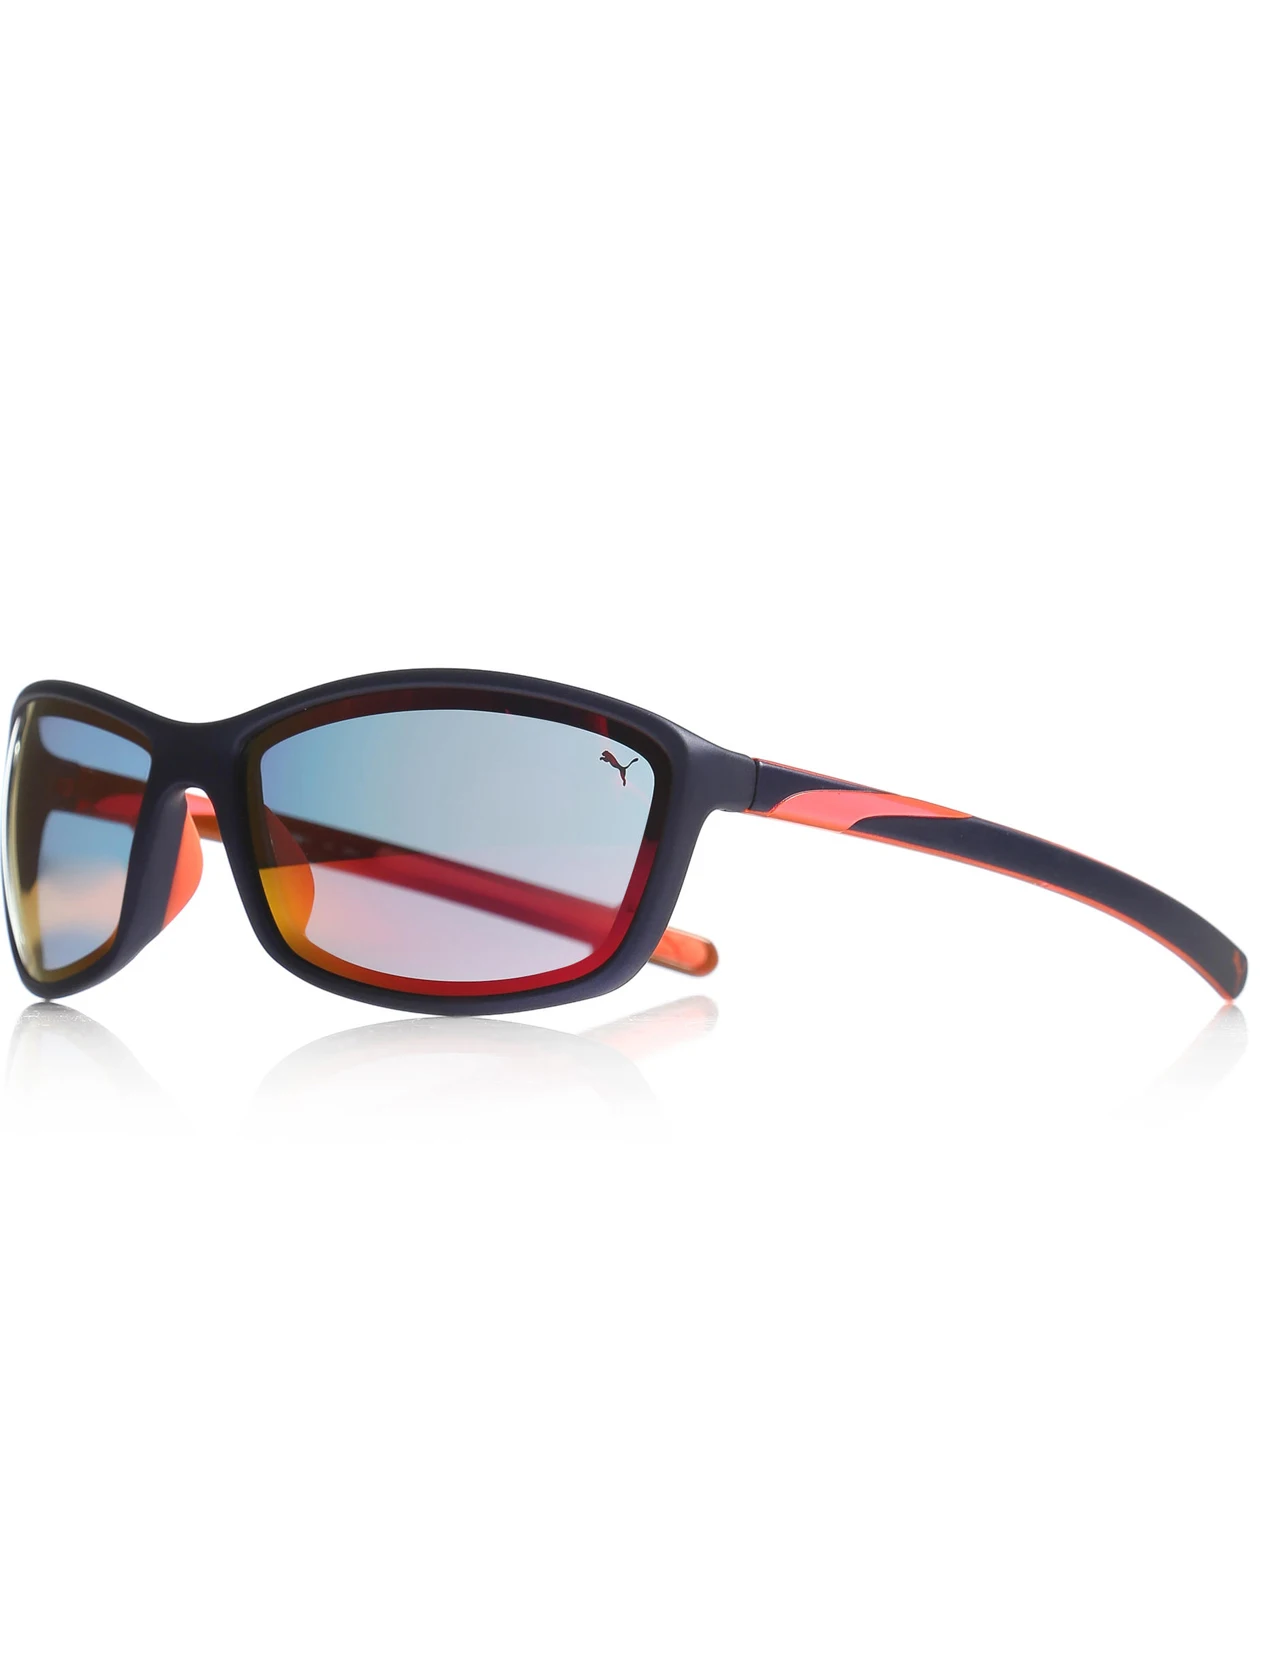 

Unisex sunglasses pm 15196 nv 64 bone navy blue organic rectangle rectangular 64-16-130 puma